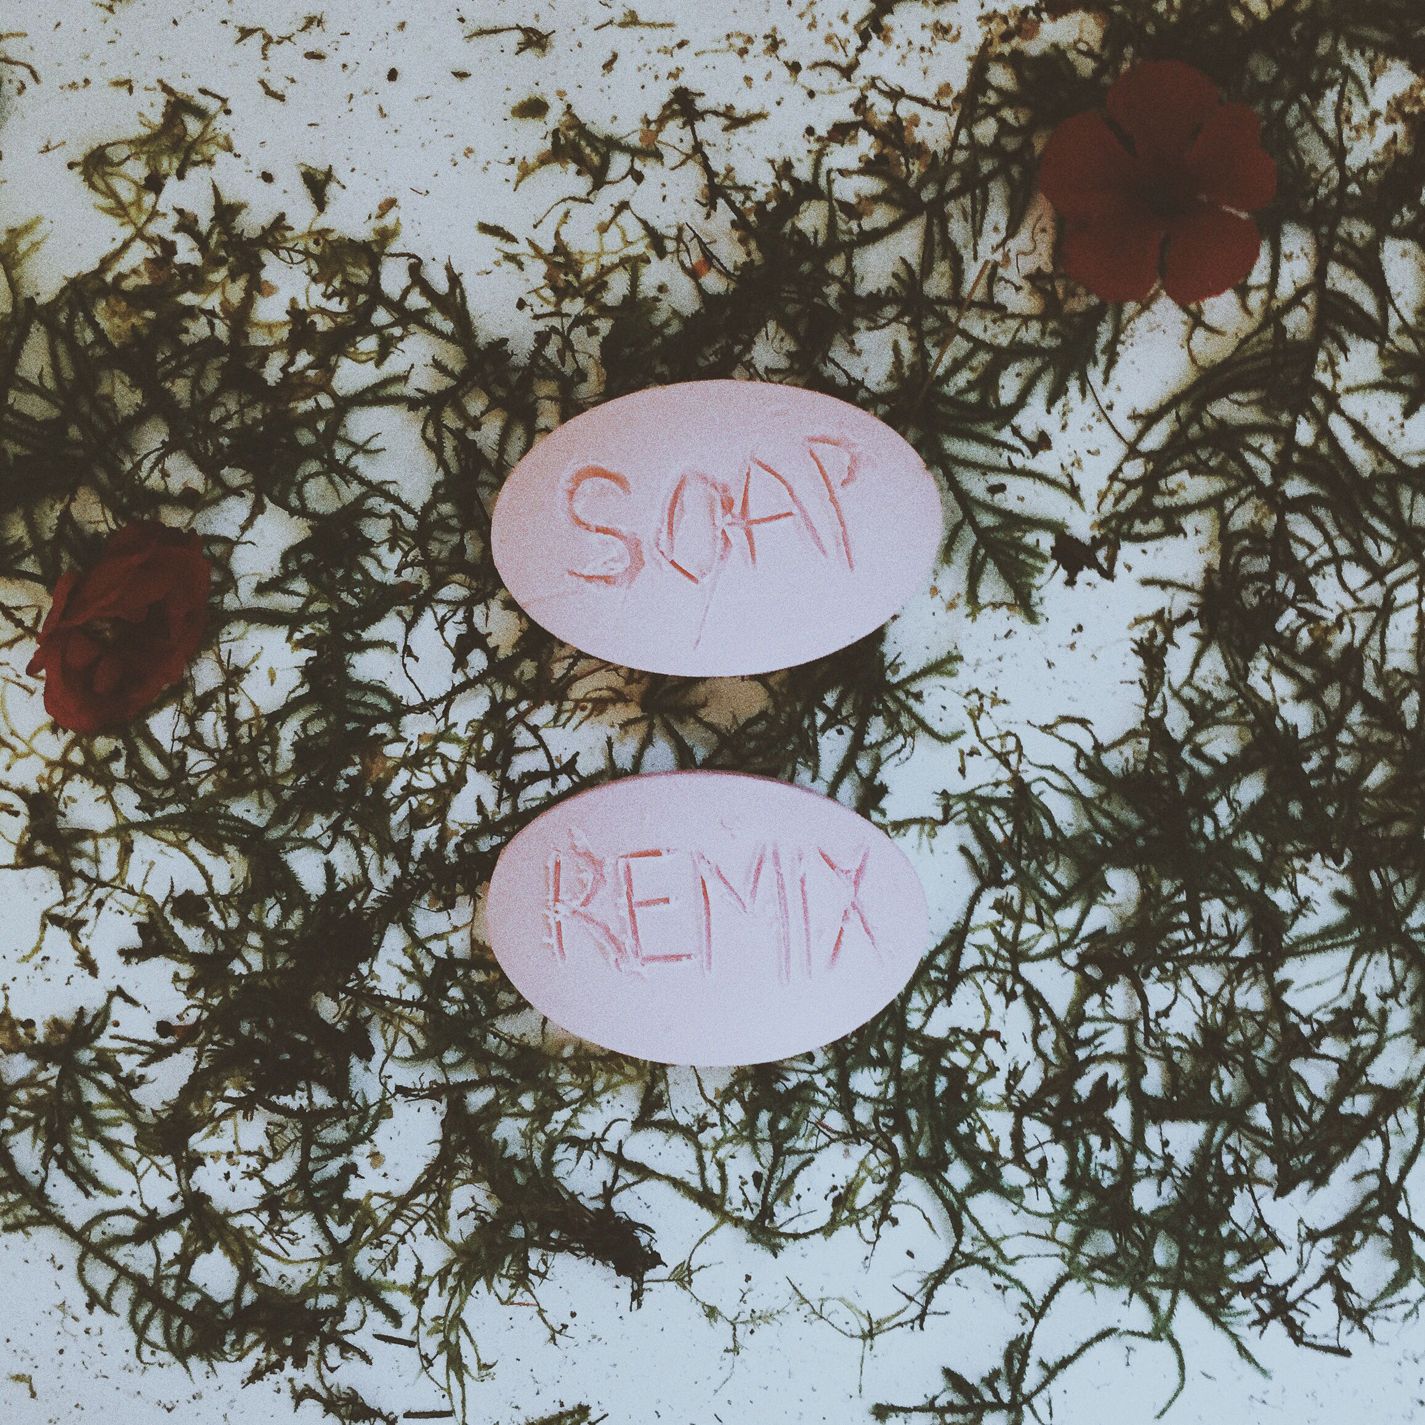 Soap (Jerome Price Remix)